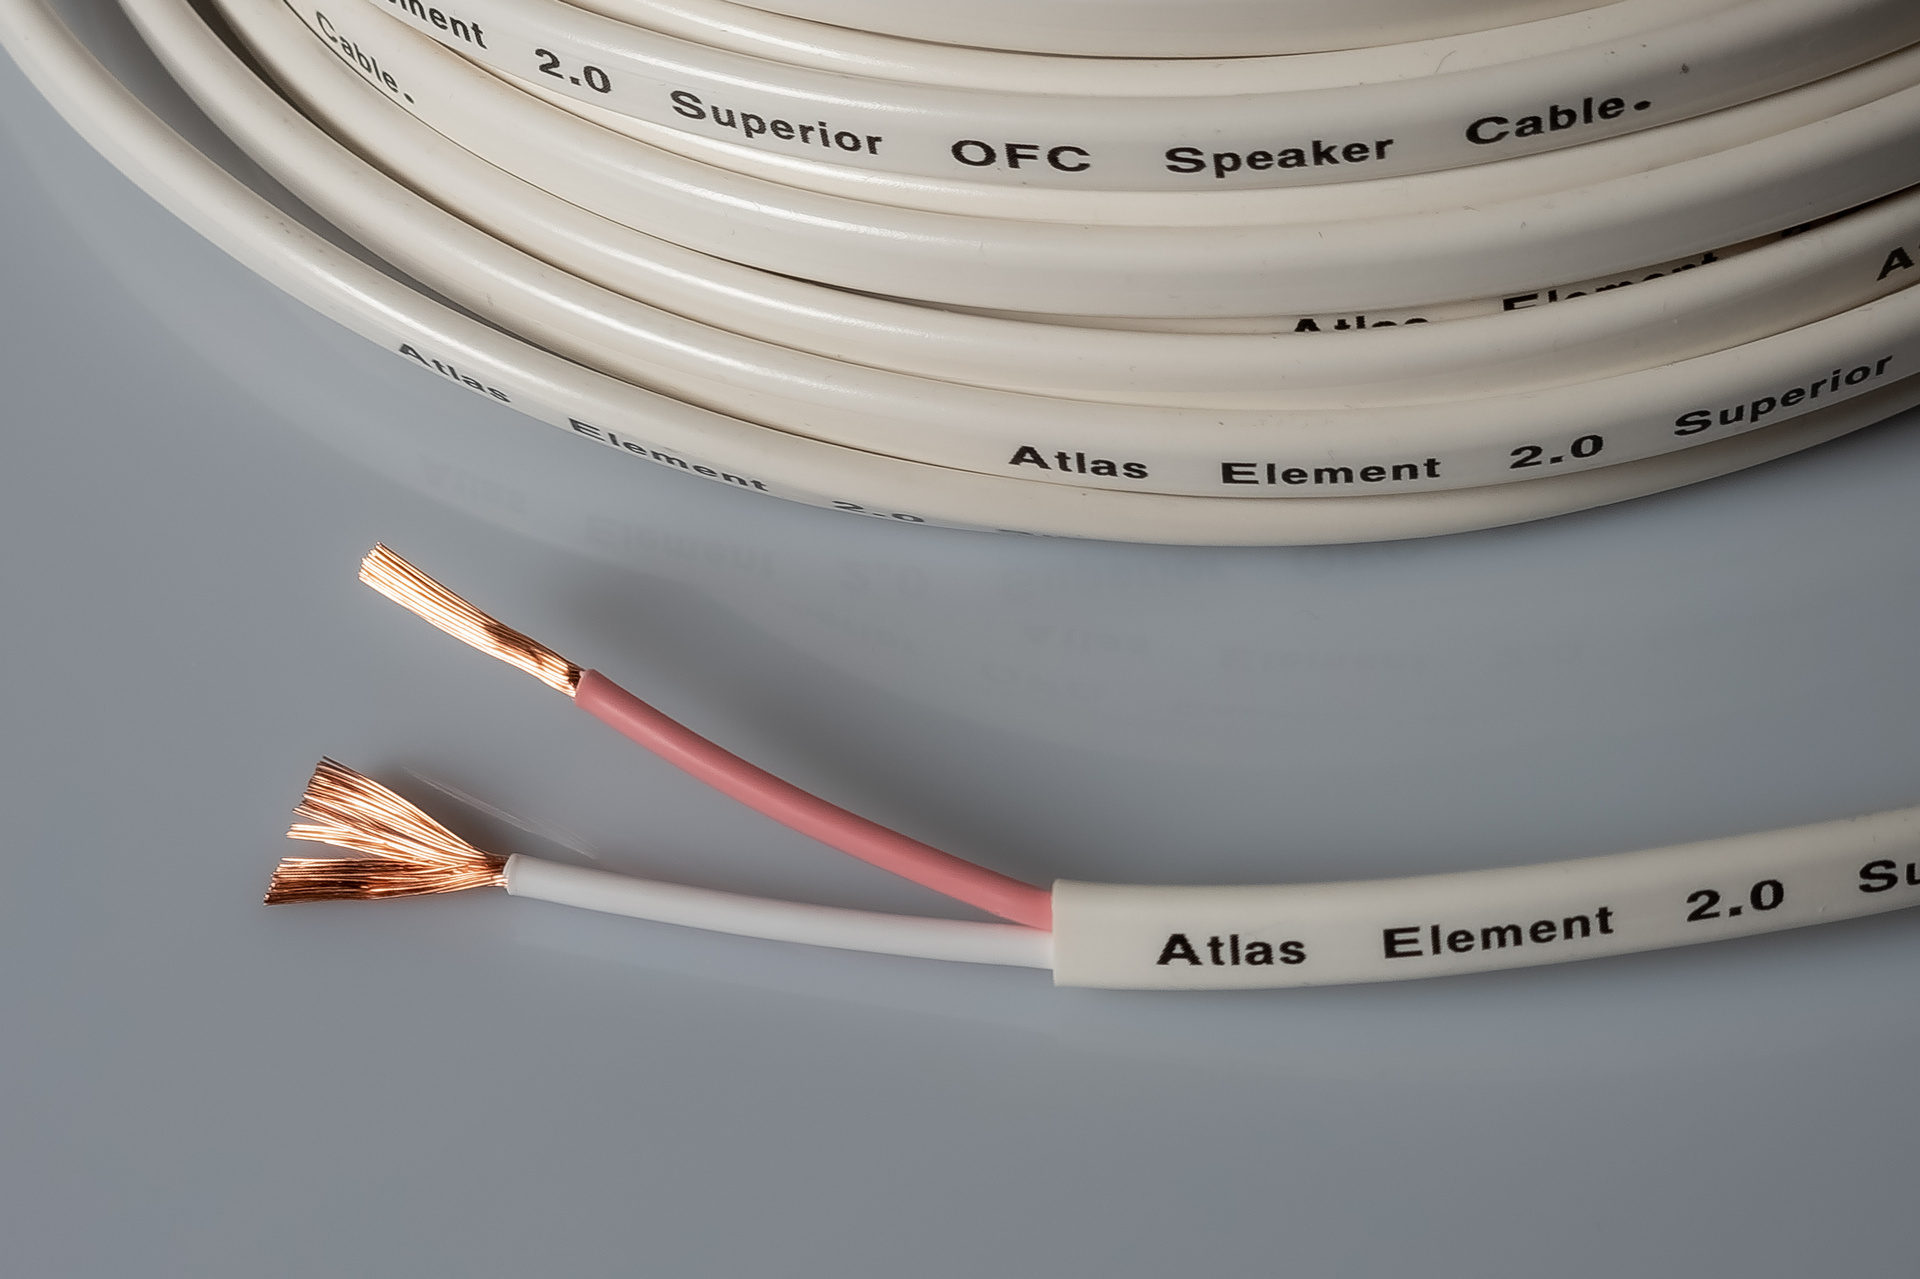 Atlas Element 2.0 Speaker Cable